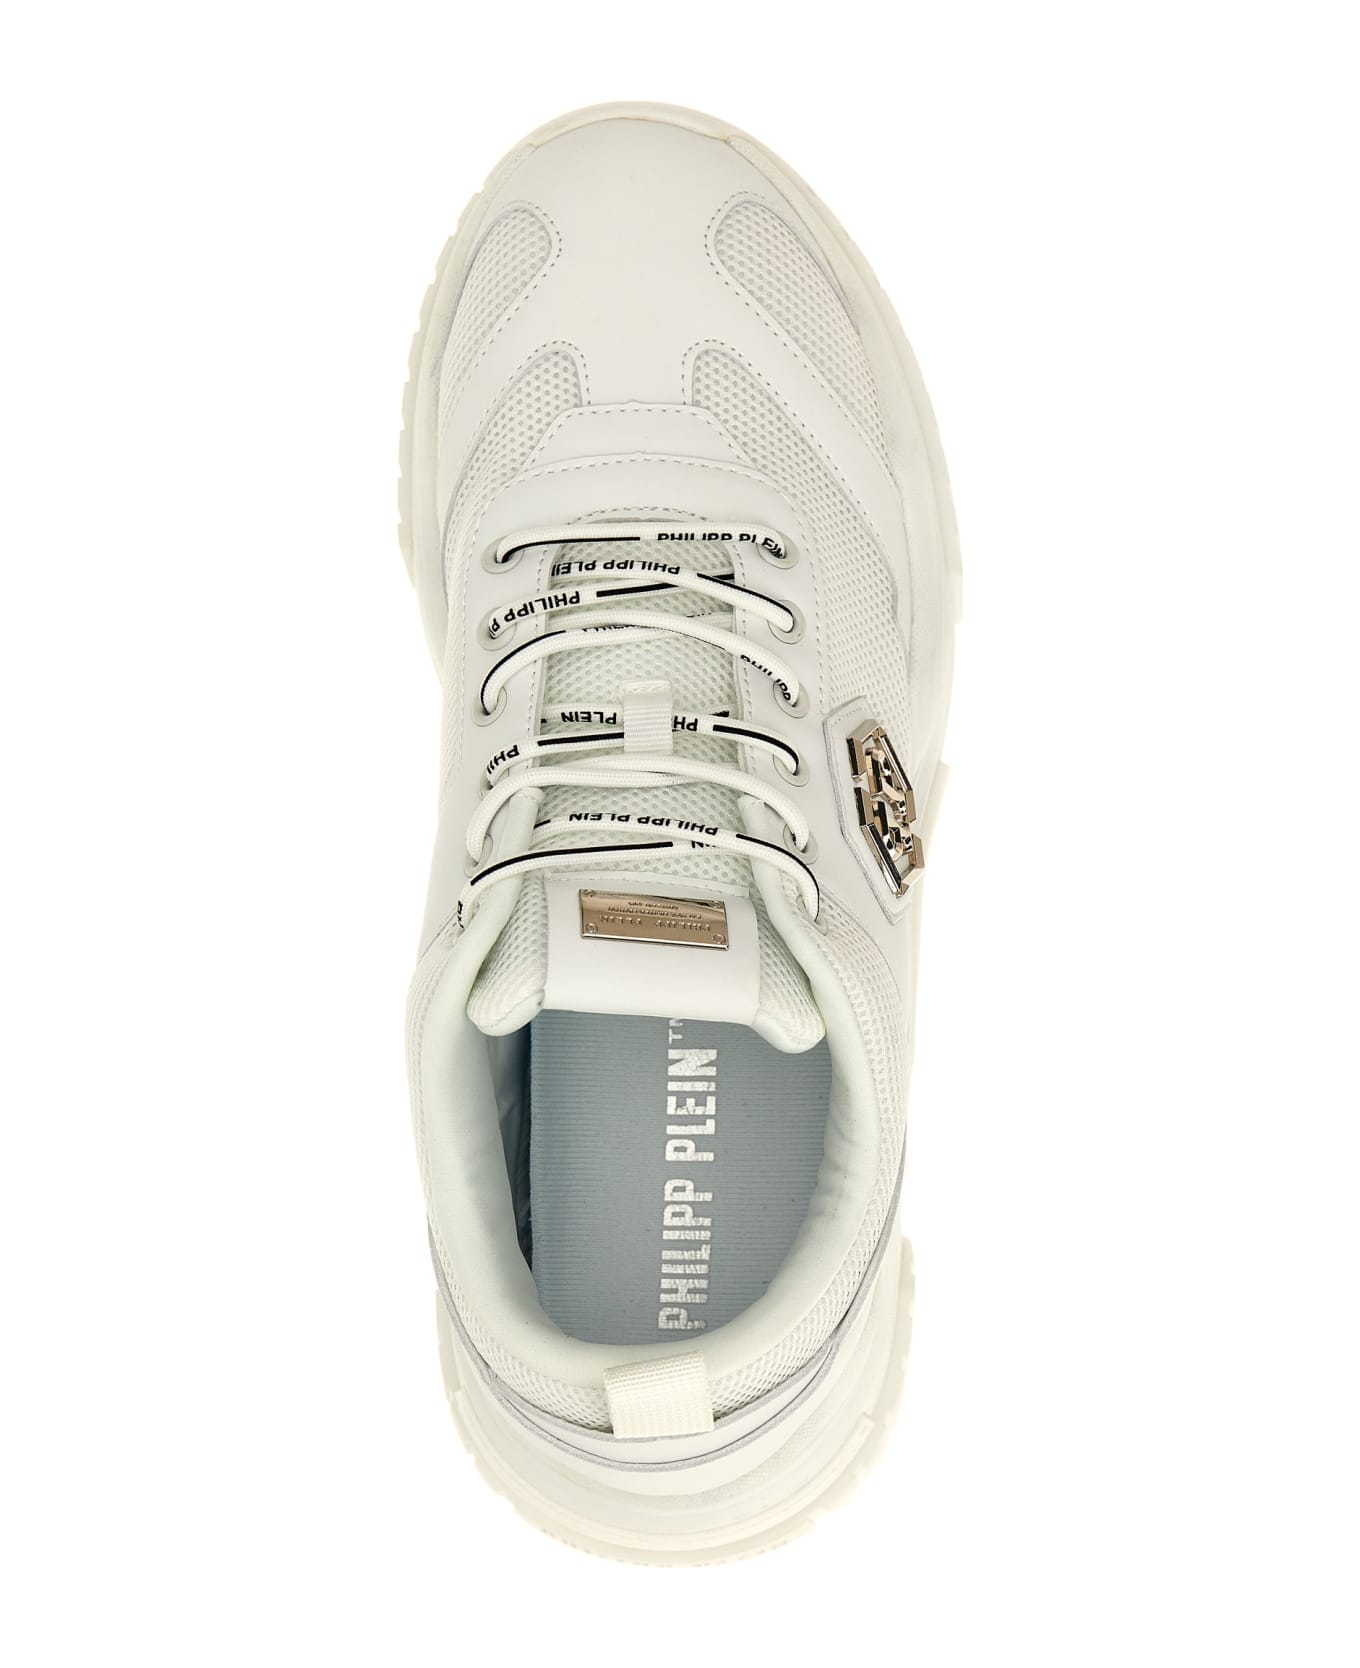 Philipp Plein 'predator' Sneakers - White スニーカー